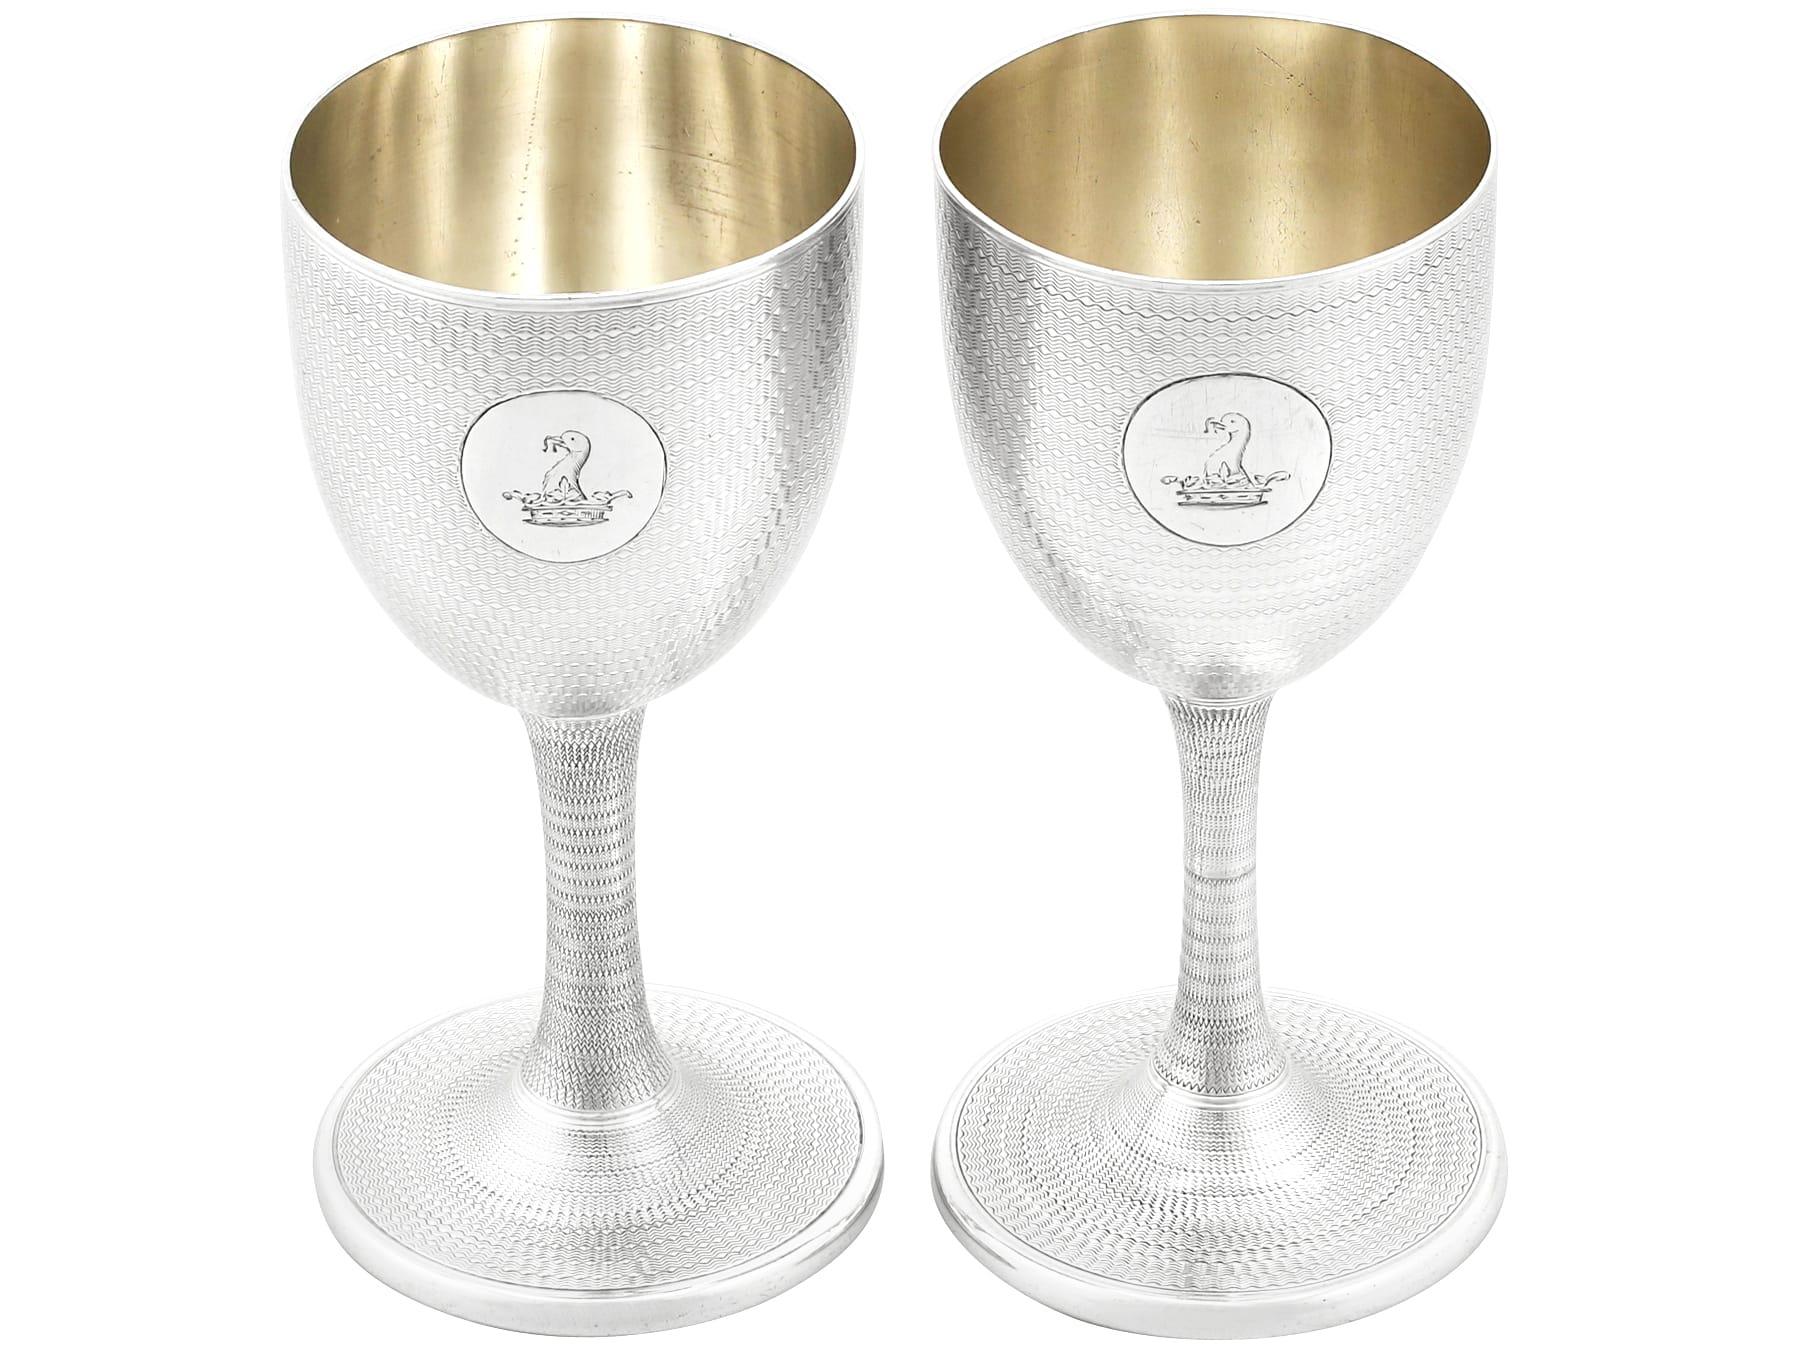 matthews company silver goblets